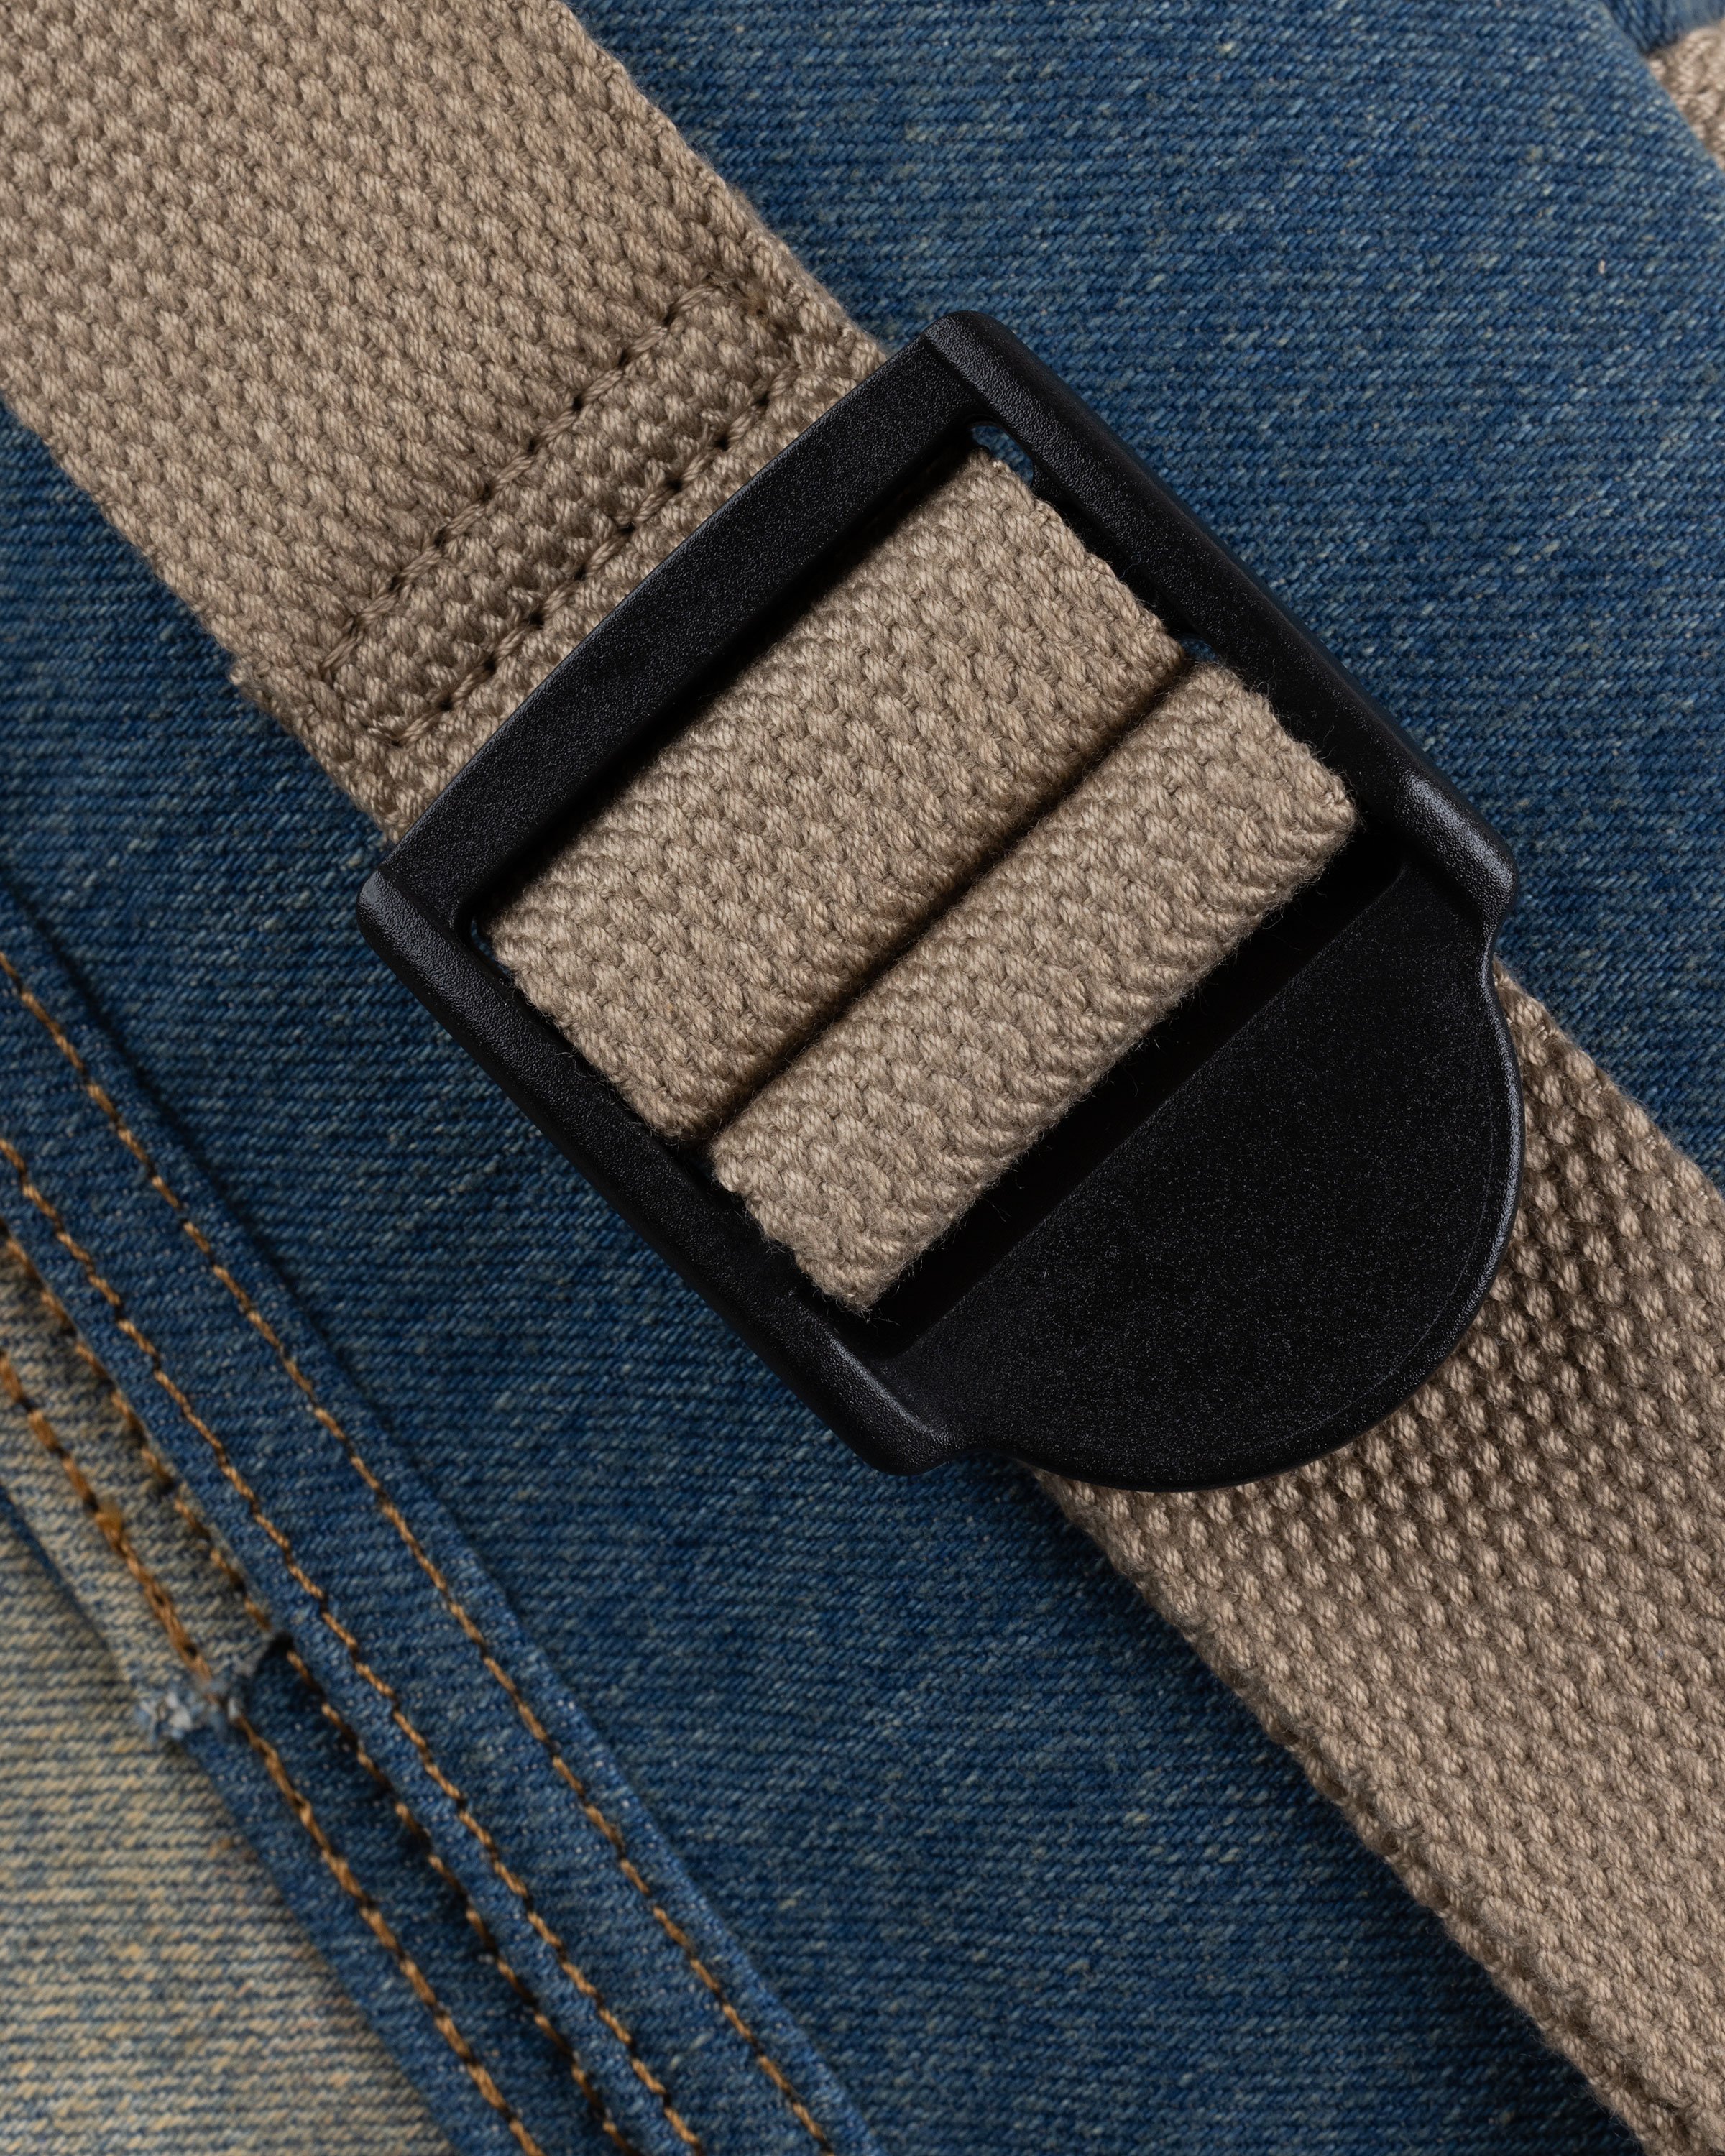 Acne Studios - Mini Messenger Bag Light Blue/Beige - Accessories - Multi - Image 4